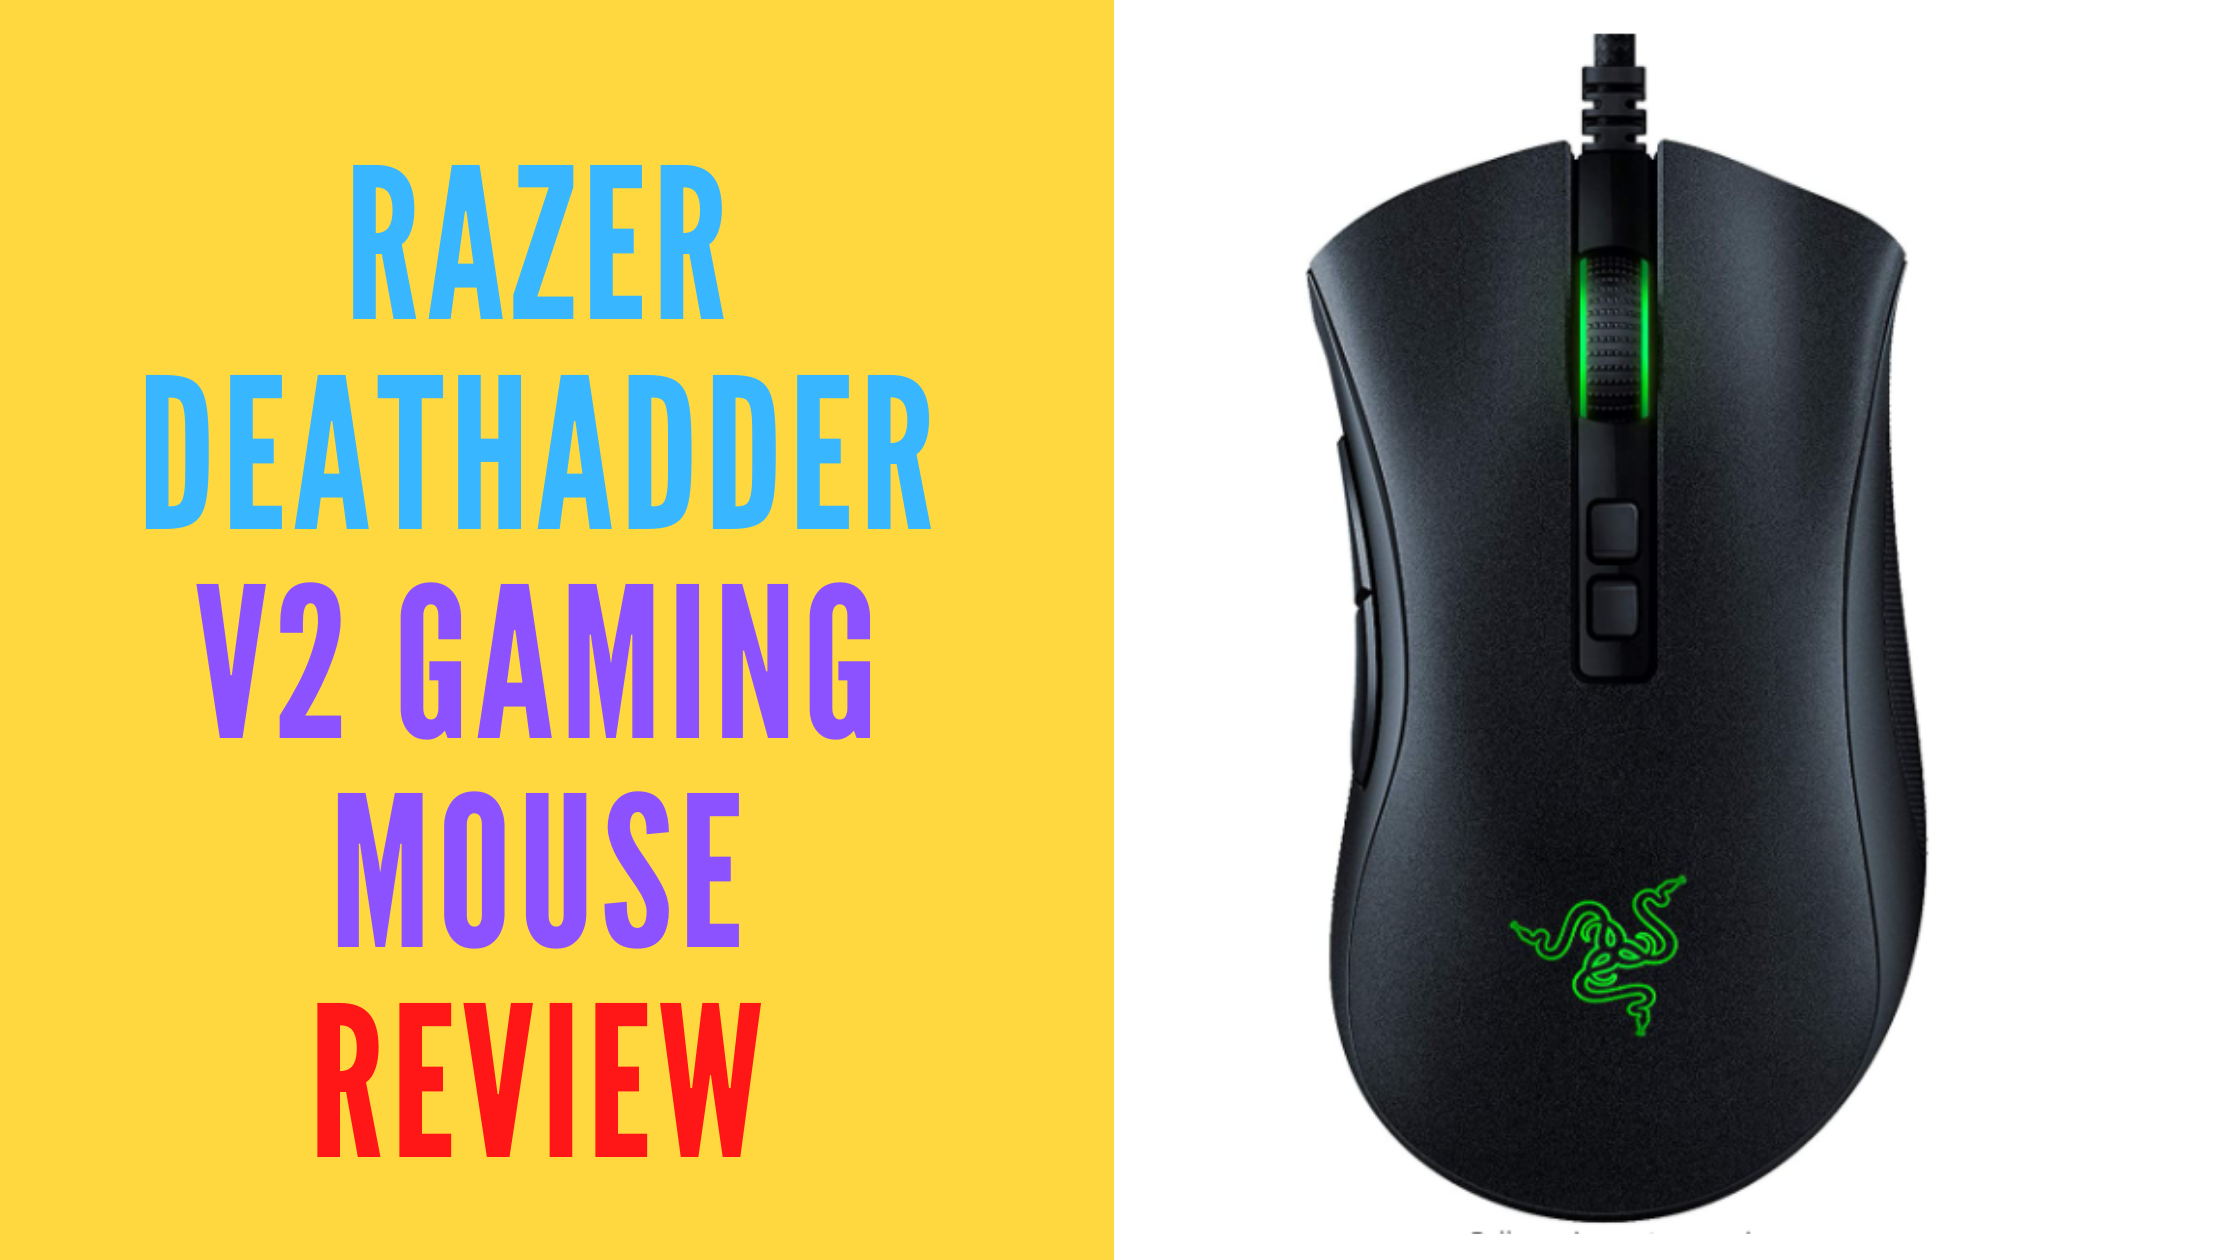 Razer DeathAdder V2 Gaming Mouse Review